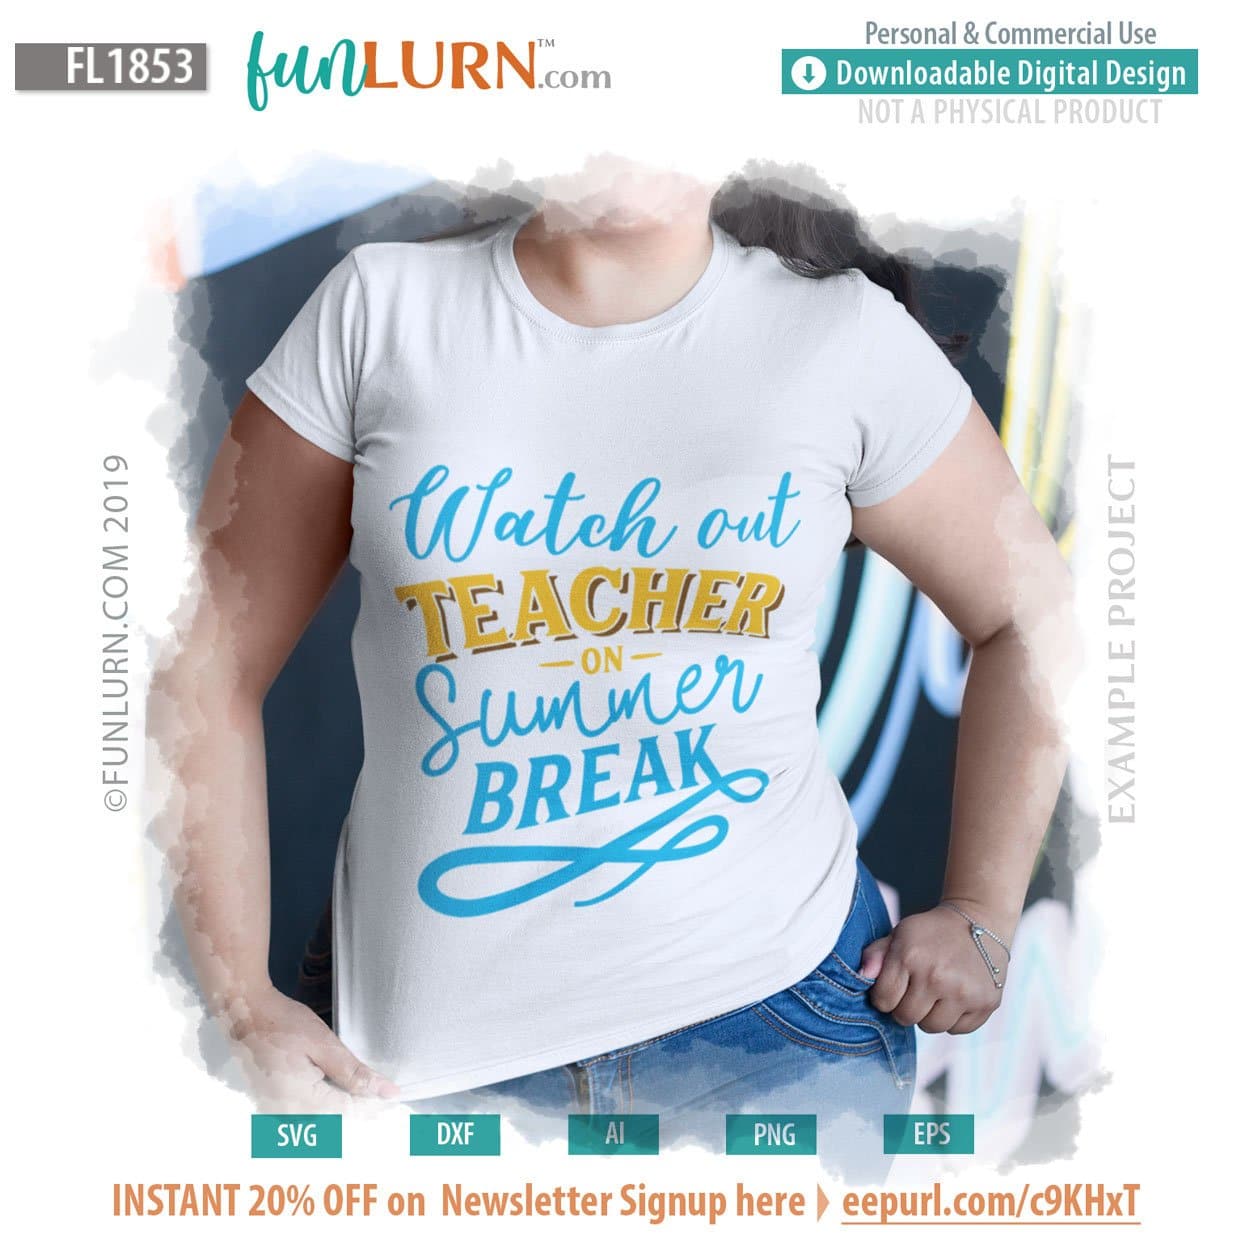 Download Watch out teacher on summer break svg - FunLurn